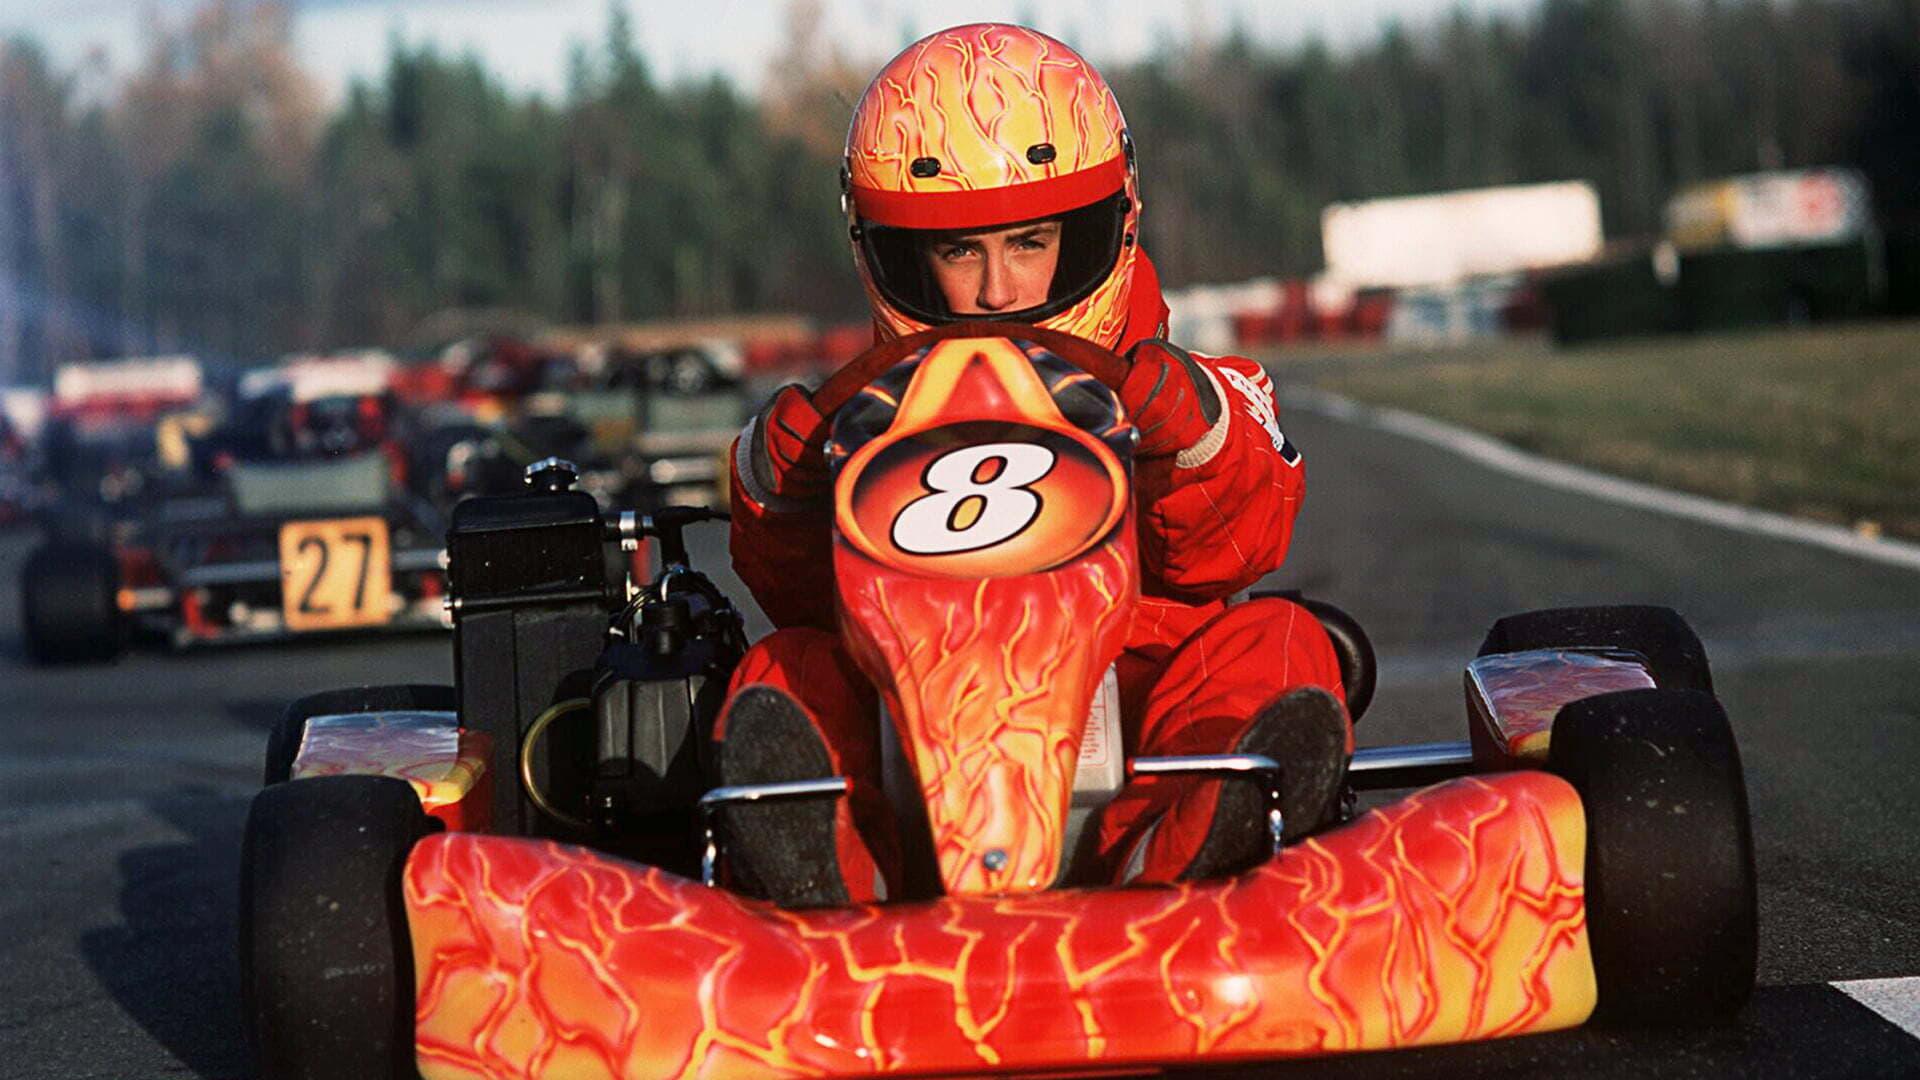 Kart Racer backdrop